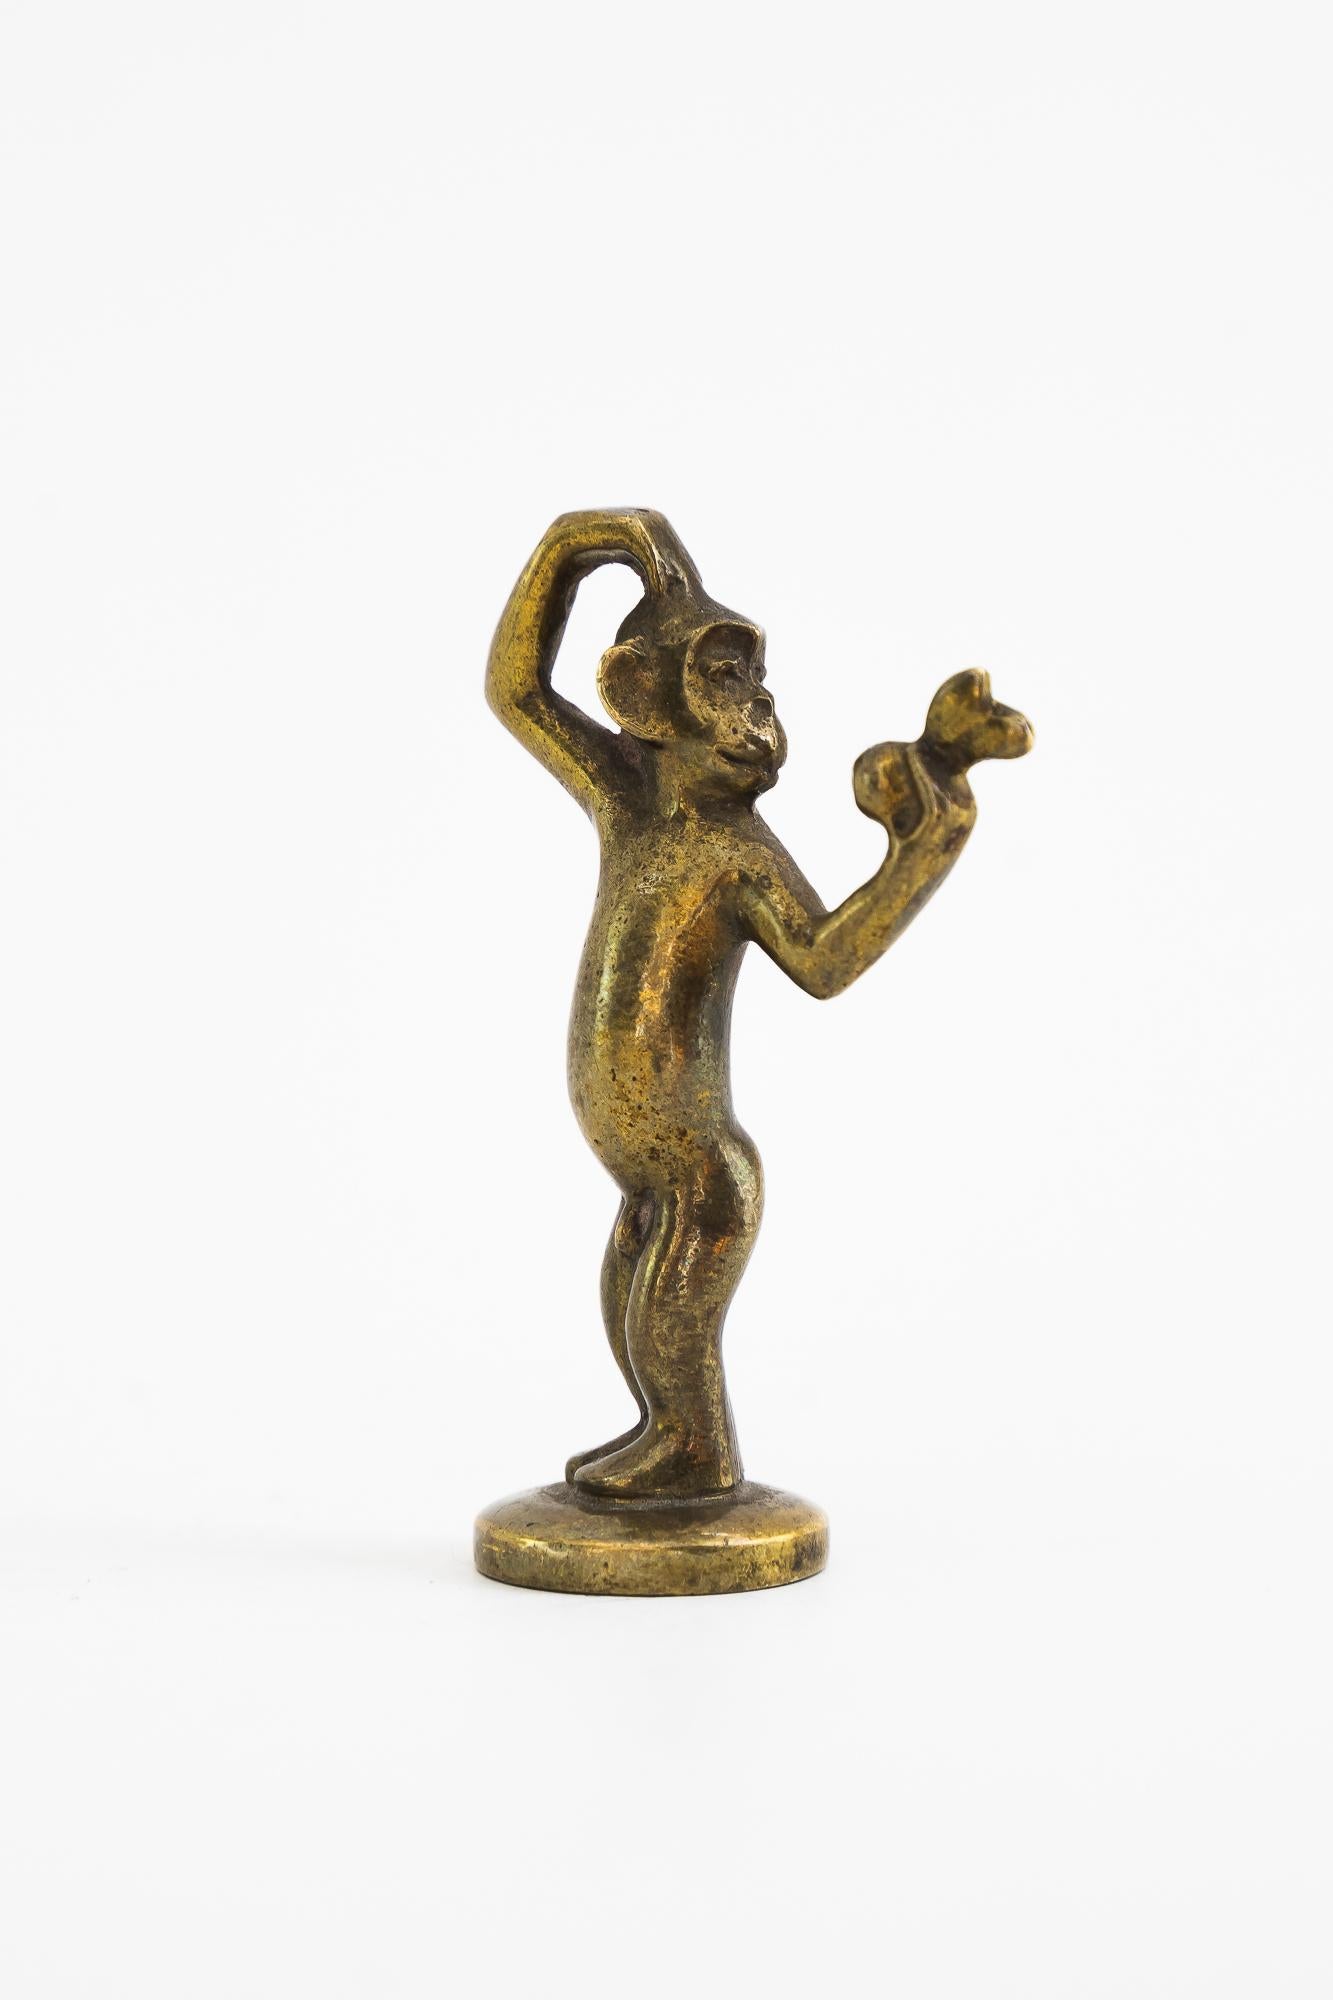 Austrian Small Richard Rohac Monkey Figurine, circa 1950s For Sale